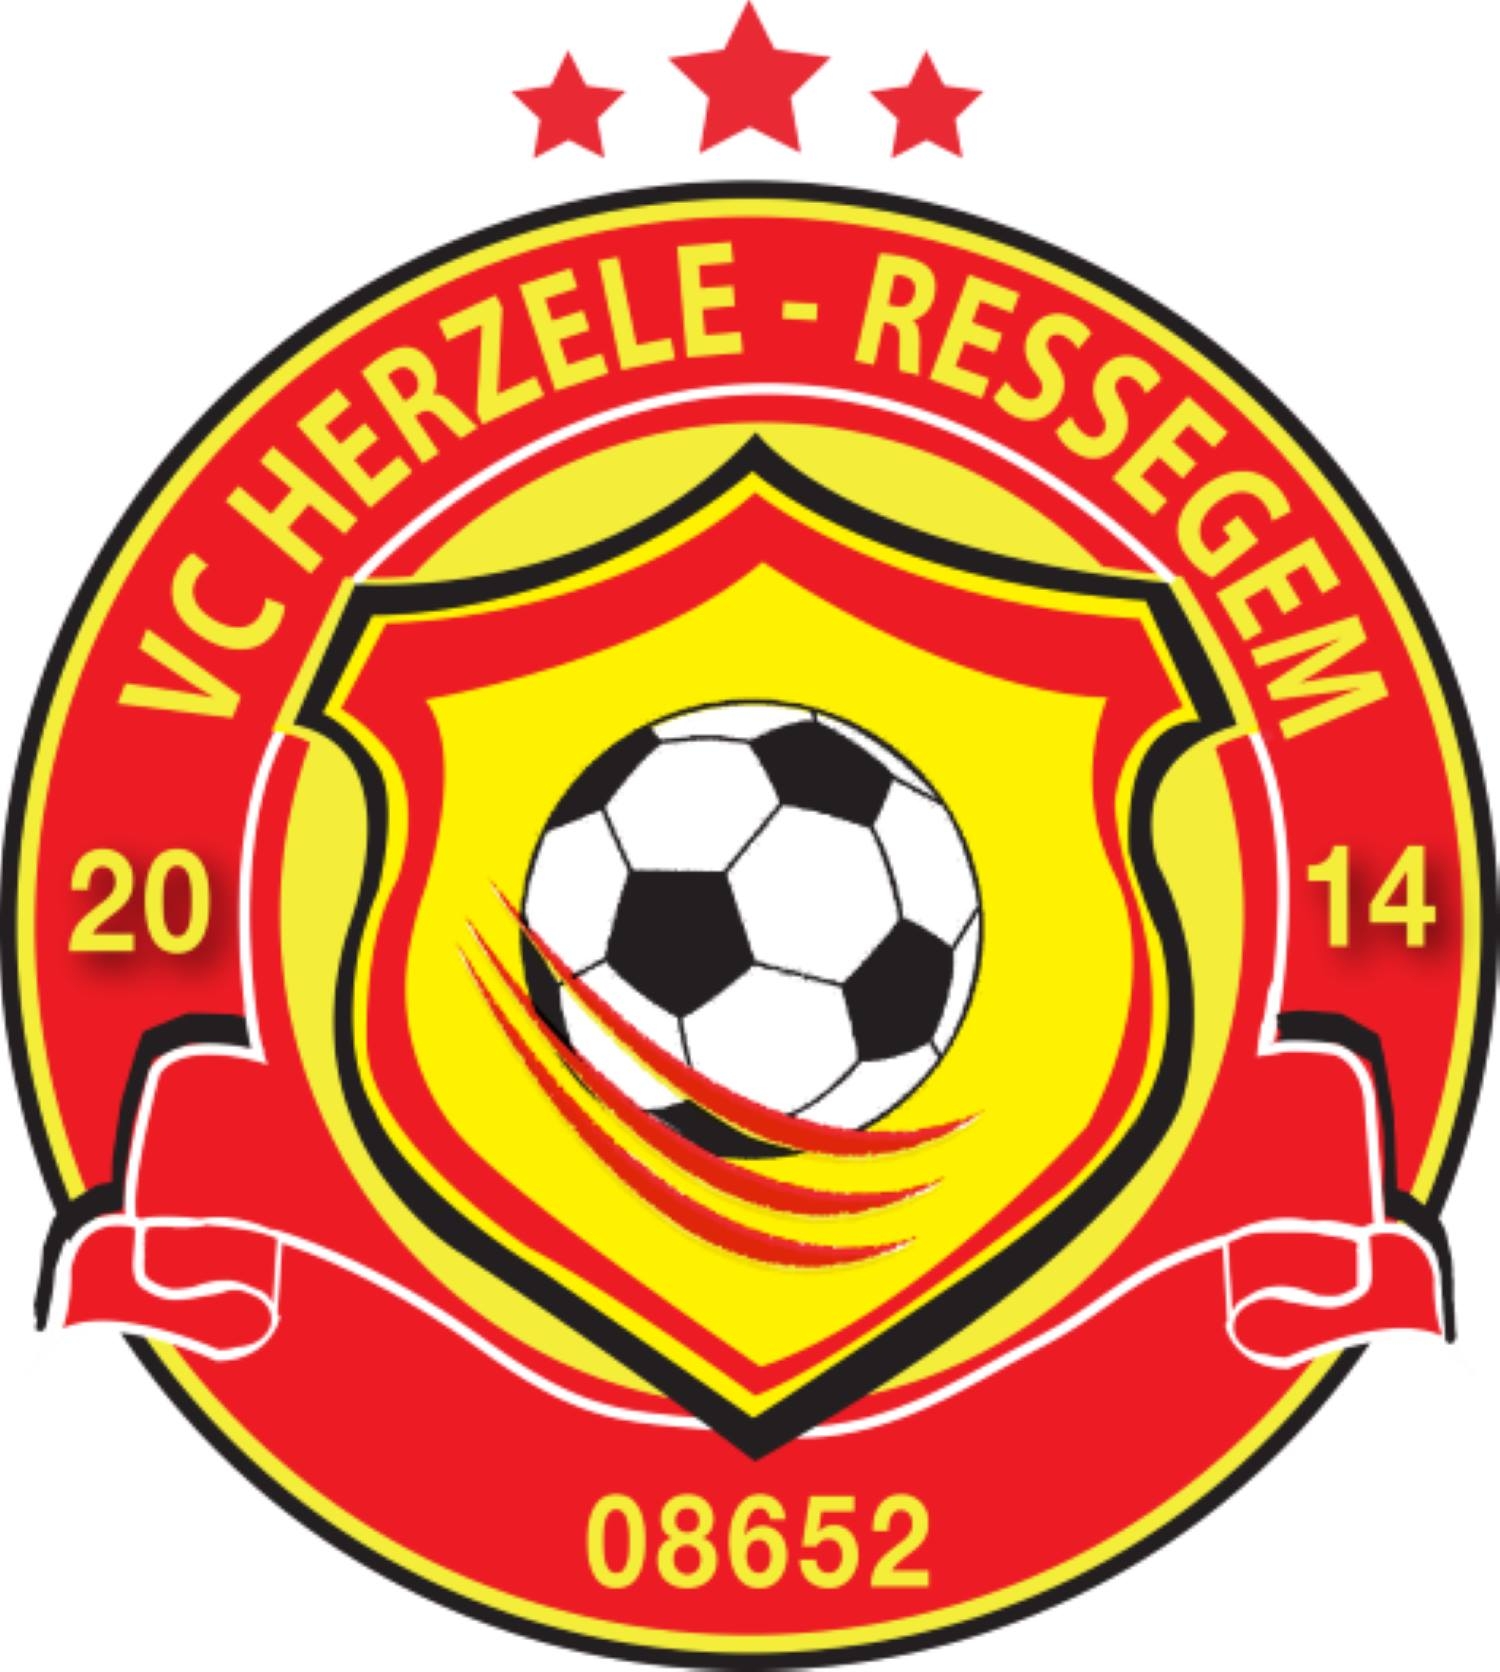 VC HERZELE RESSEGEM Logo